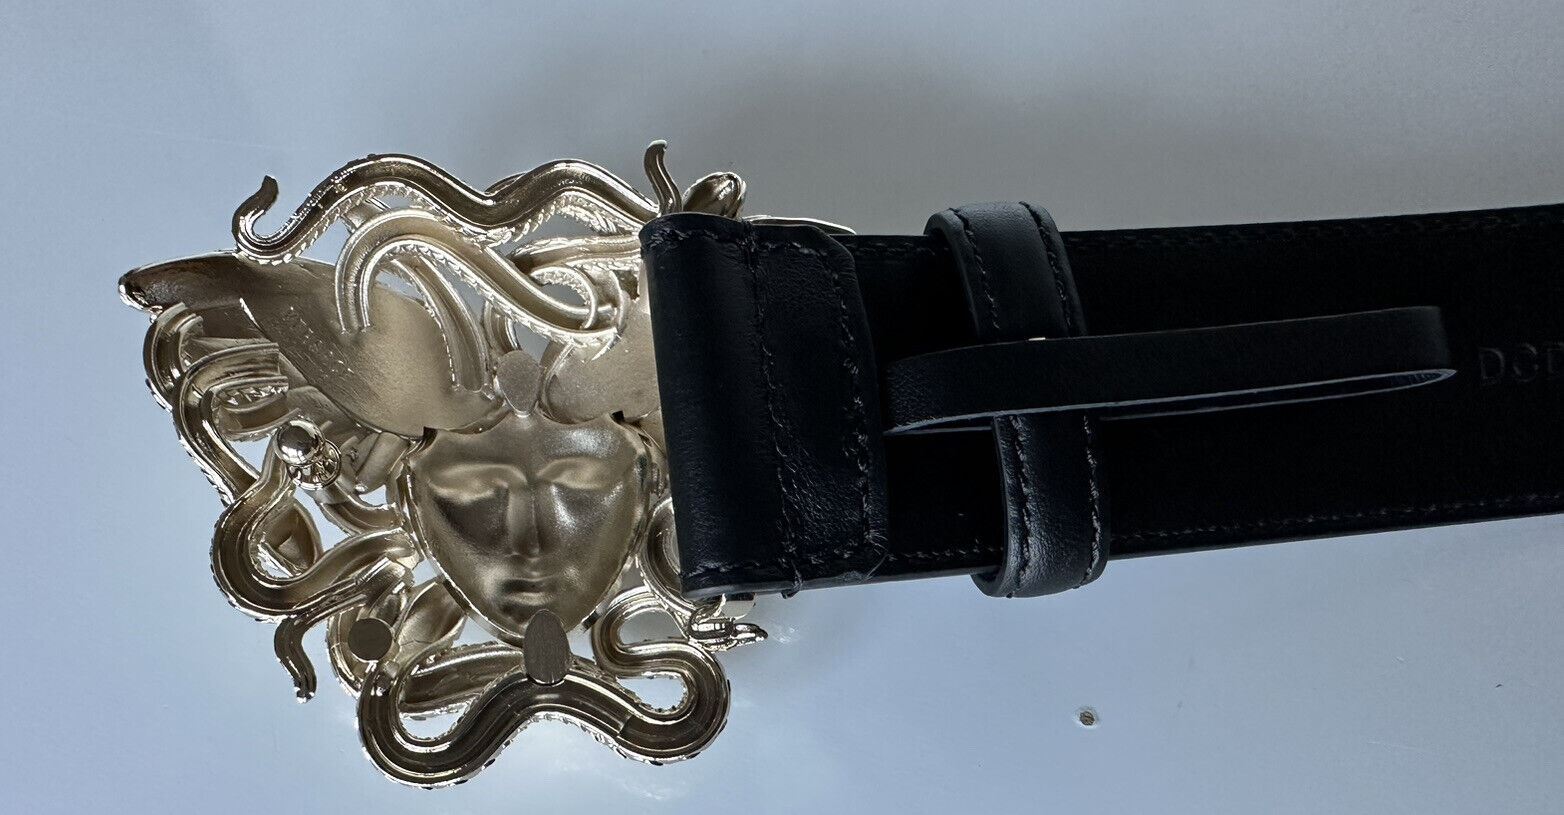 NIB $950 Versace Medusa Light Gold Buckle Black Leather Belt 85 (34) DCDG816S